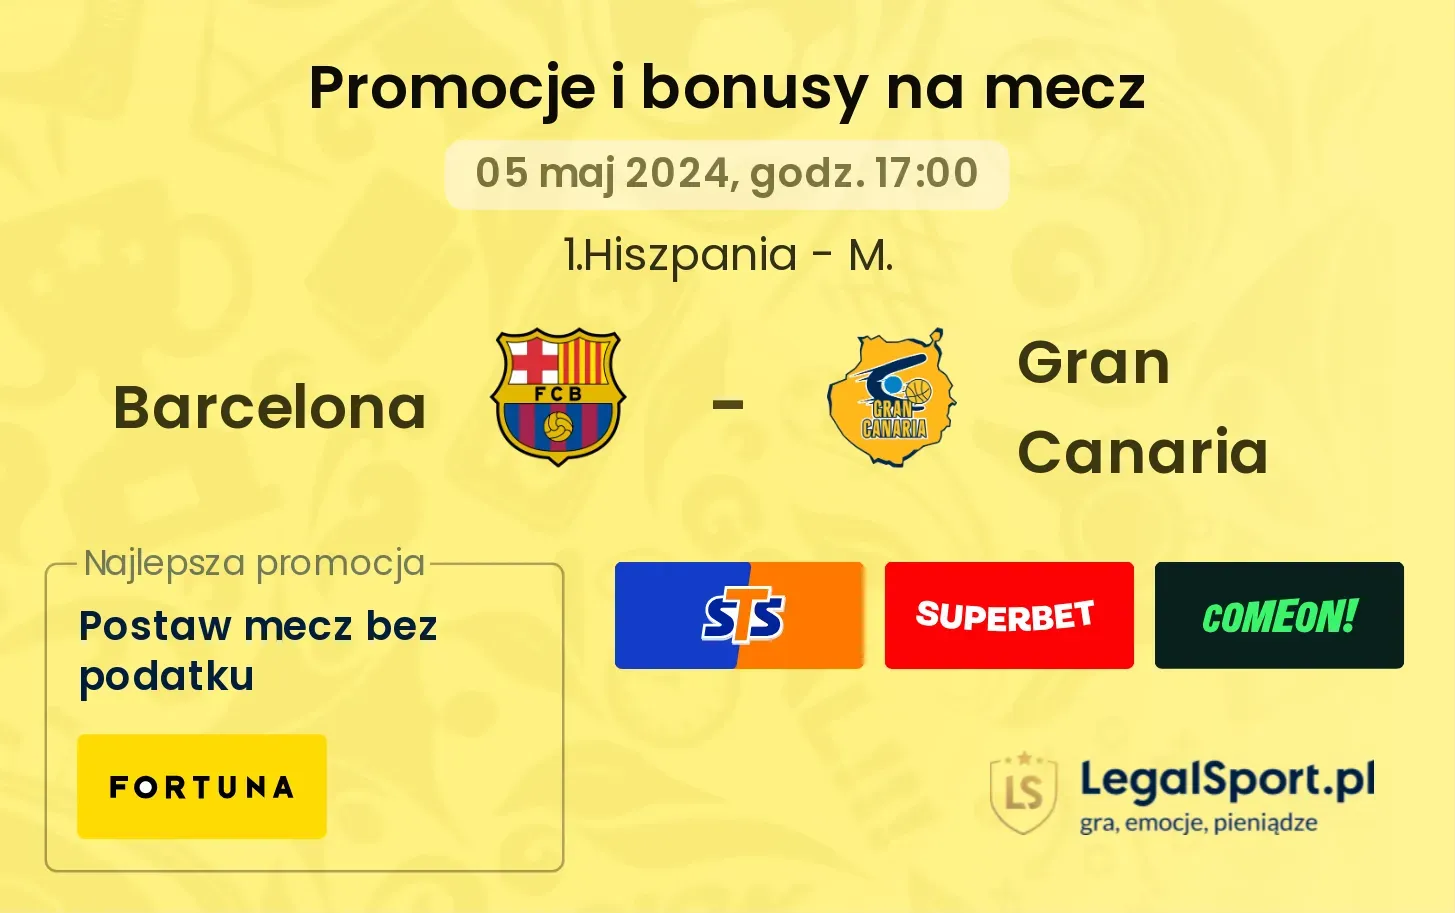 Barcelona - Gran Canaria promocje bonusy na mecz